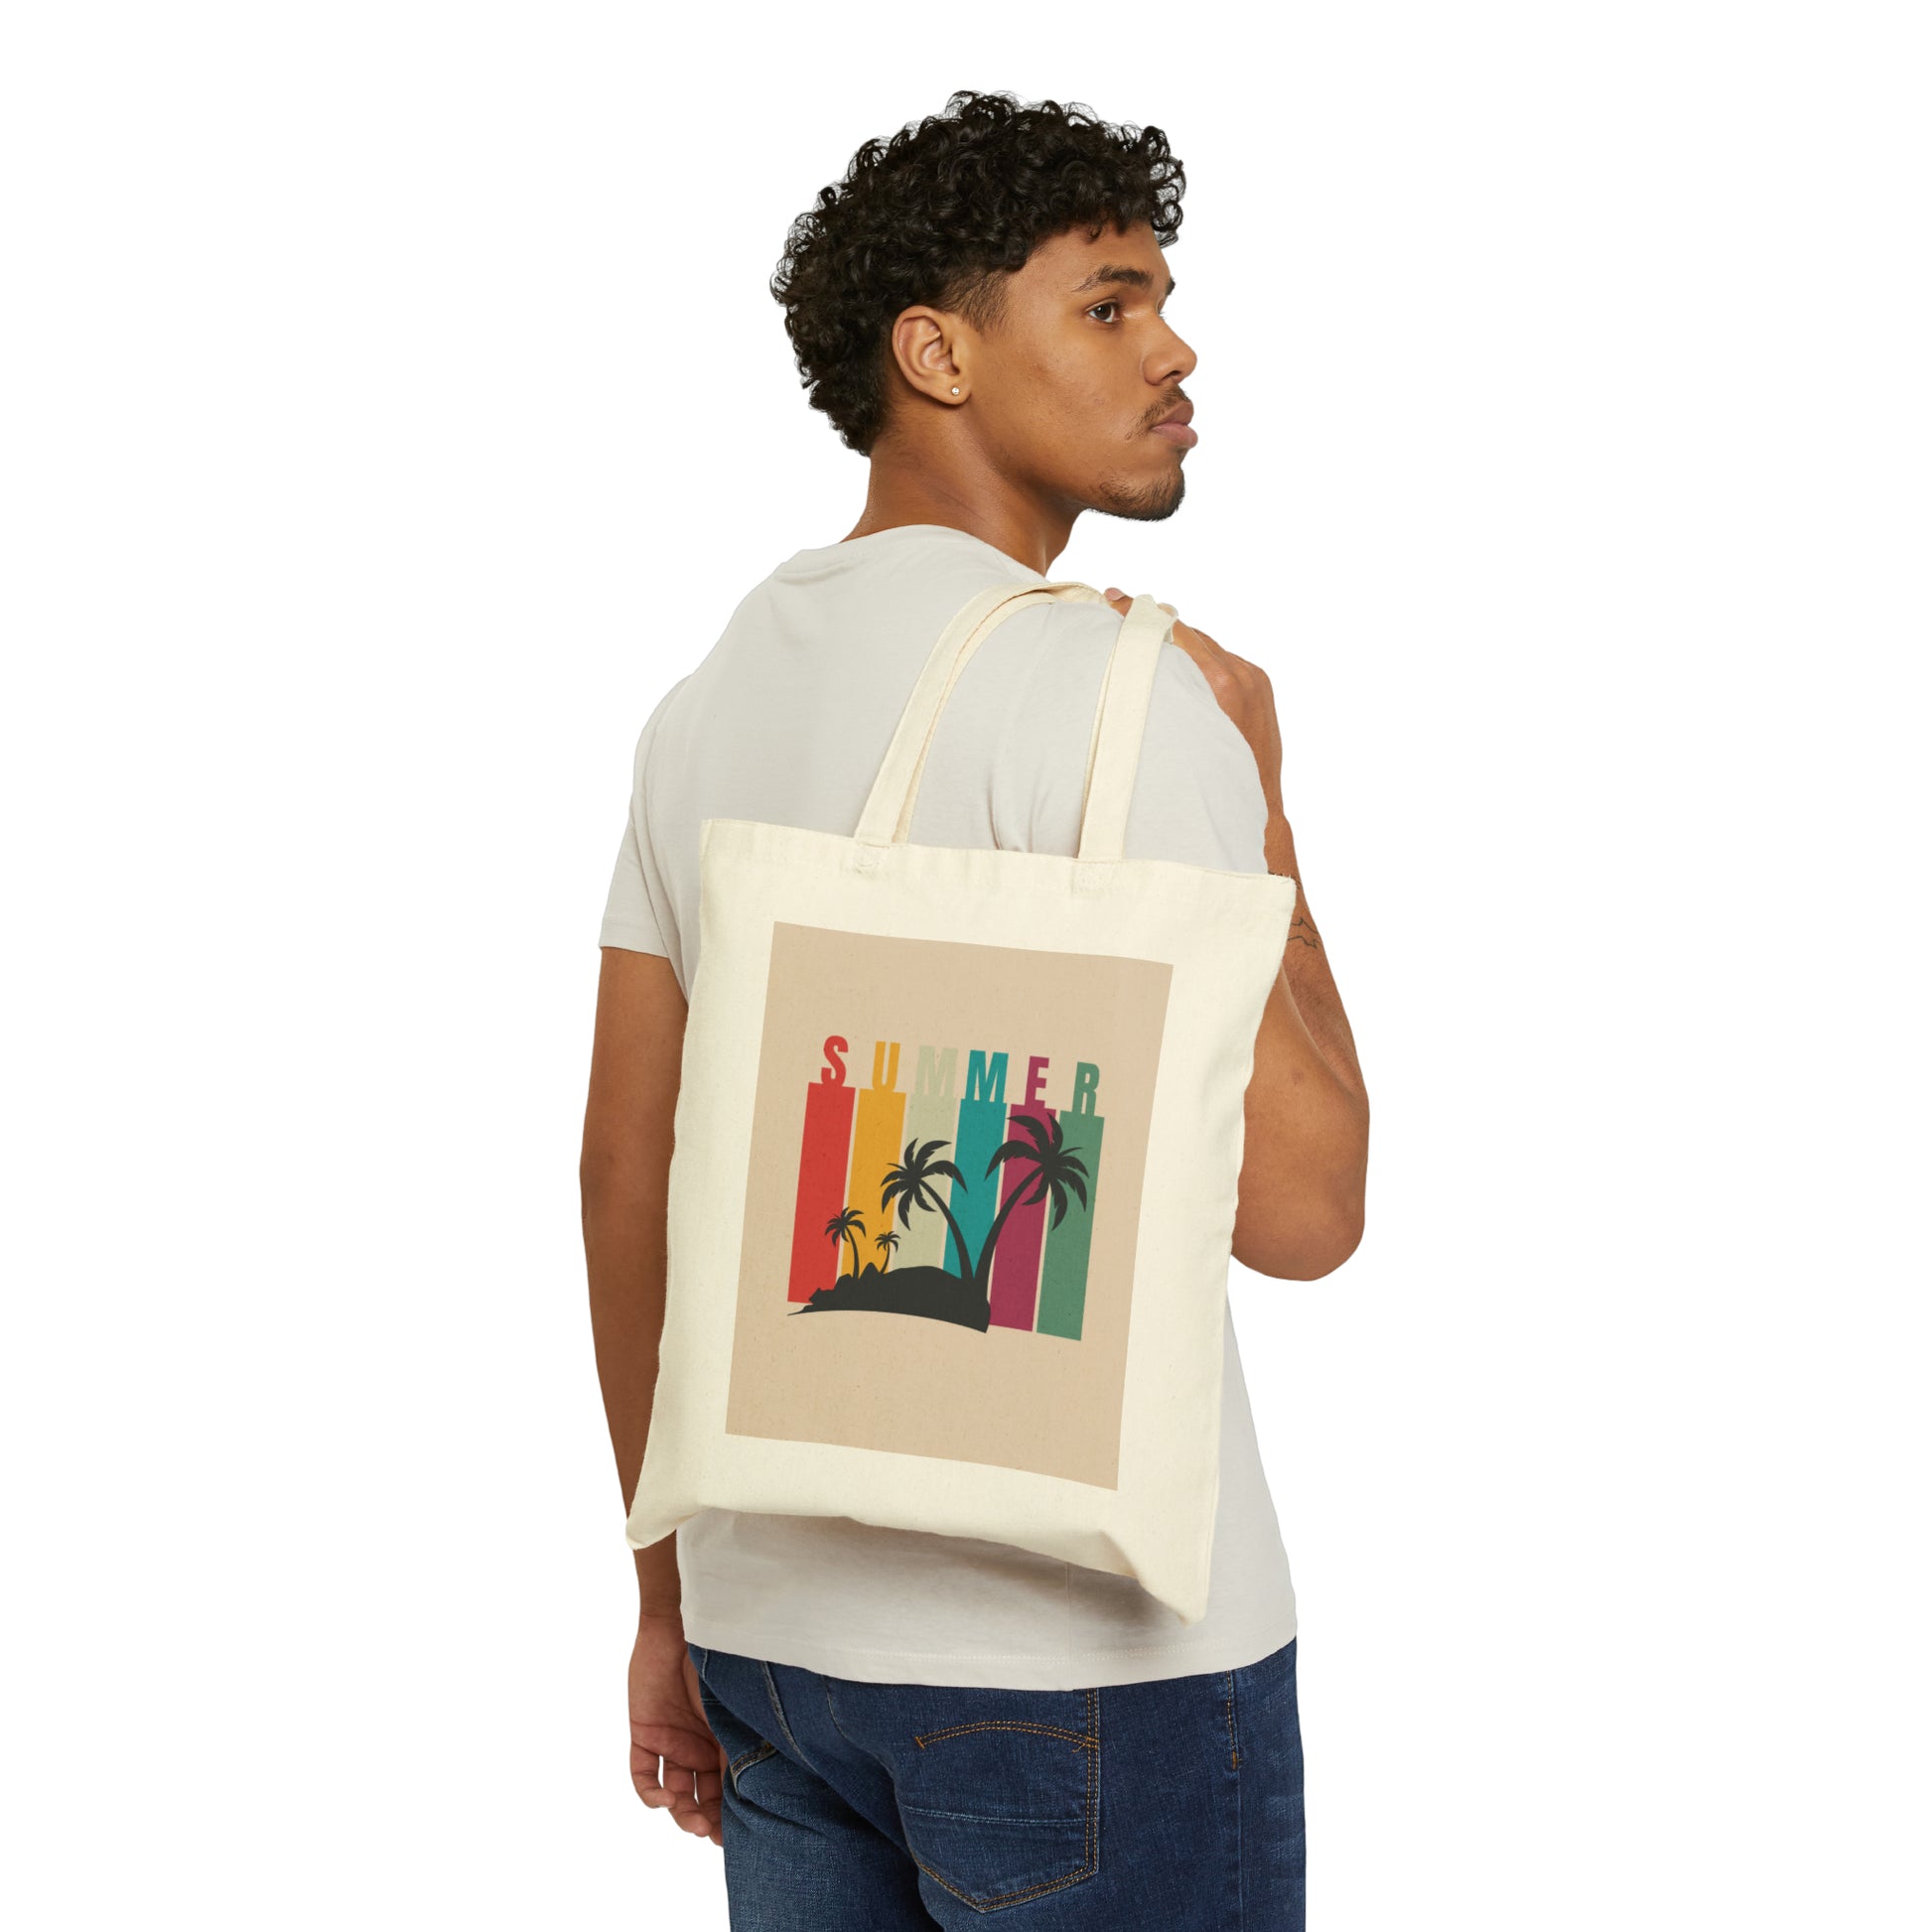 Cotton Canvas Tote Bag | Summer - Ribooa